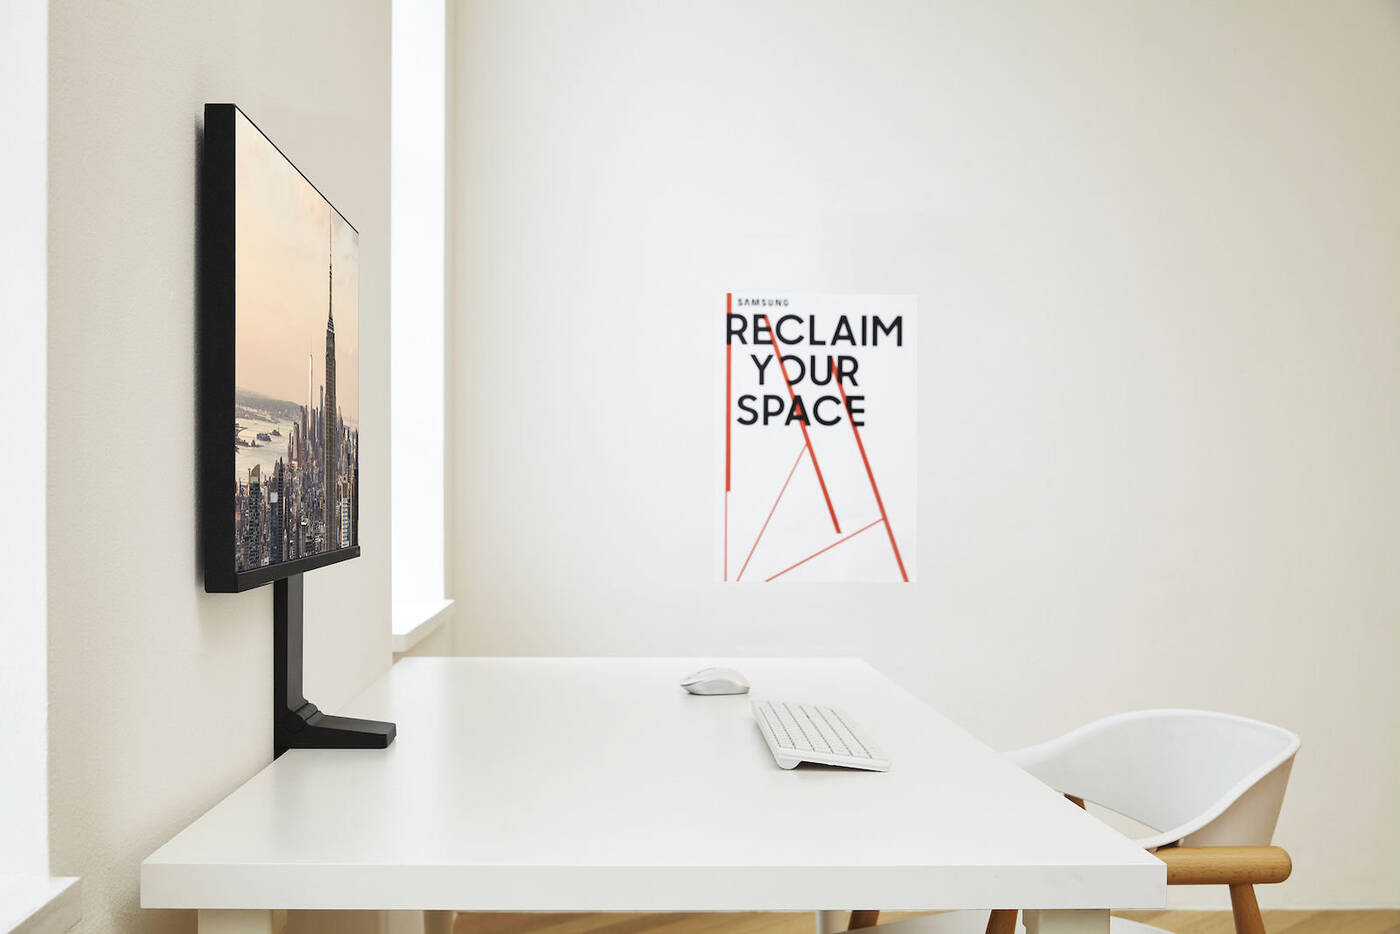 Space Monitor Samsunga zaoszczędzi Wam miejsce na biurku